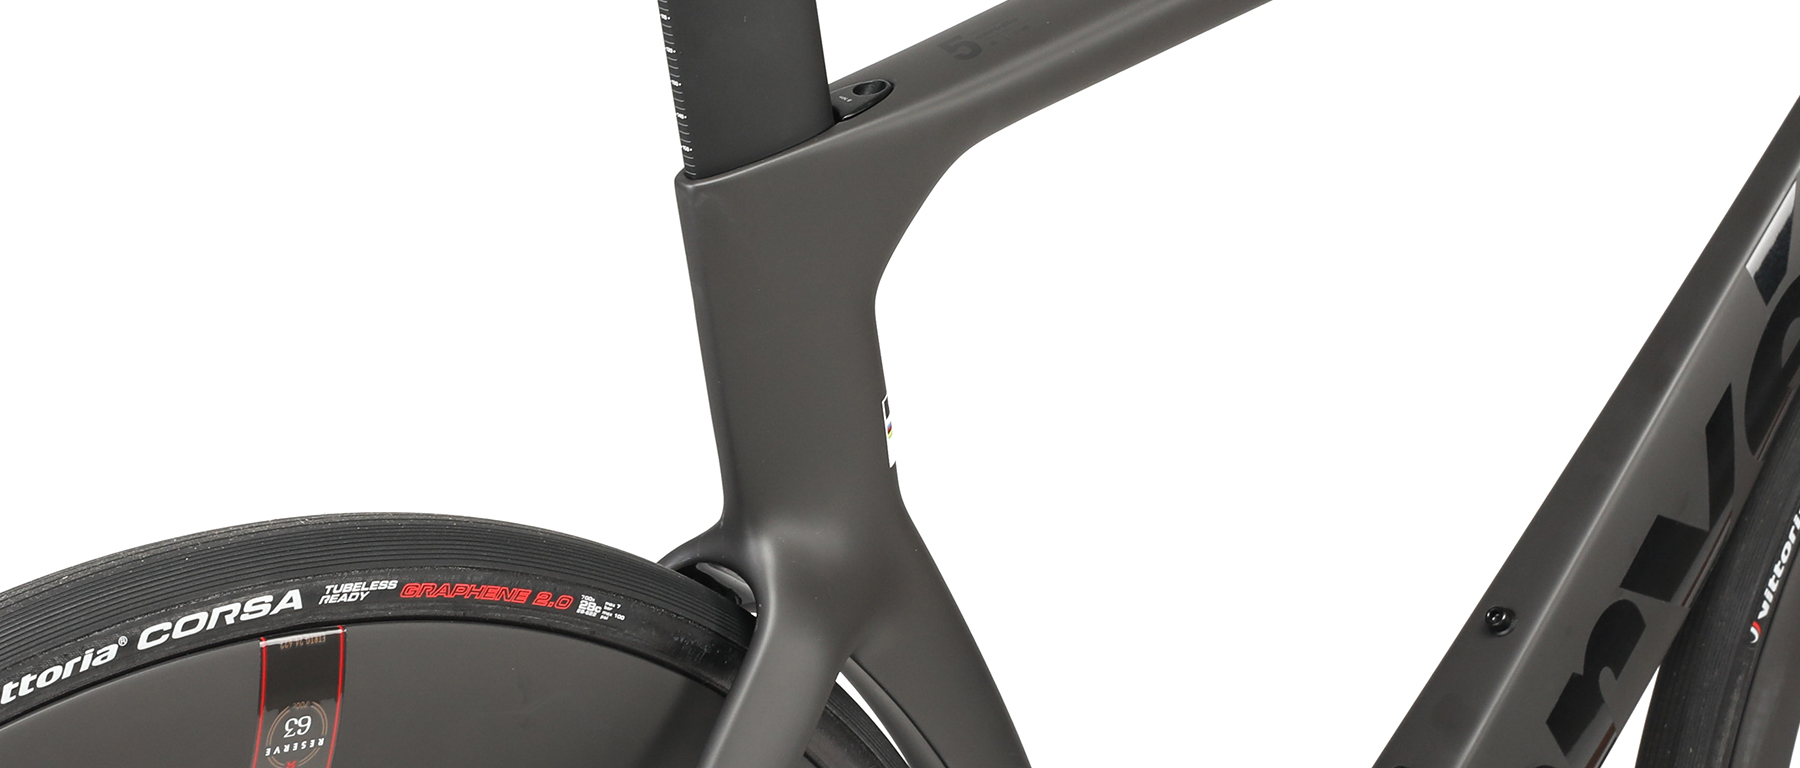 Cervelo S5 Force eTap AXS Bicycle 2023